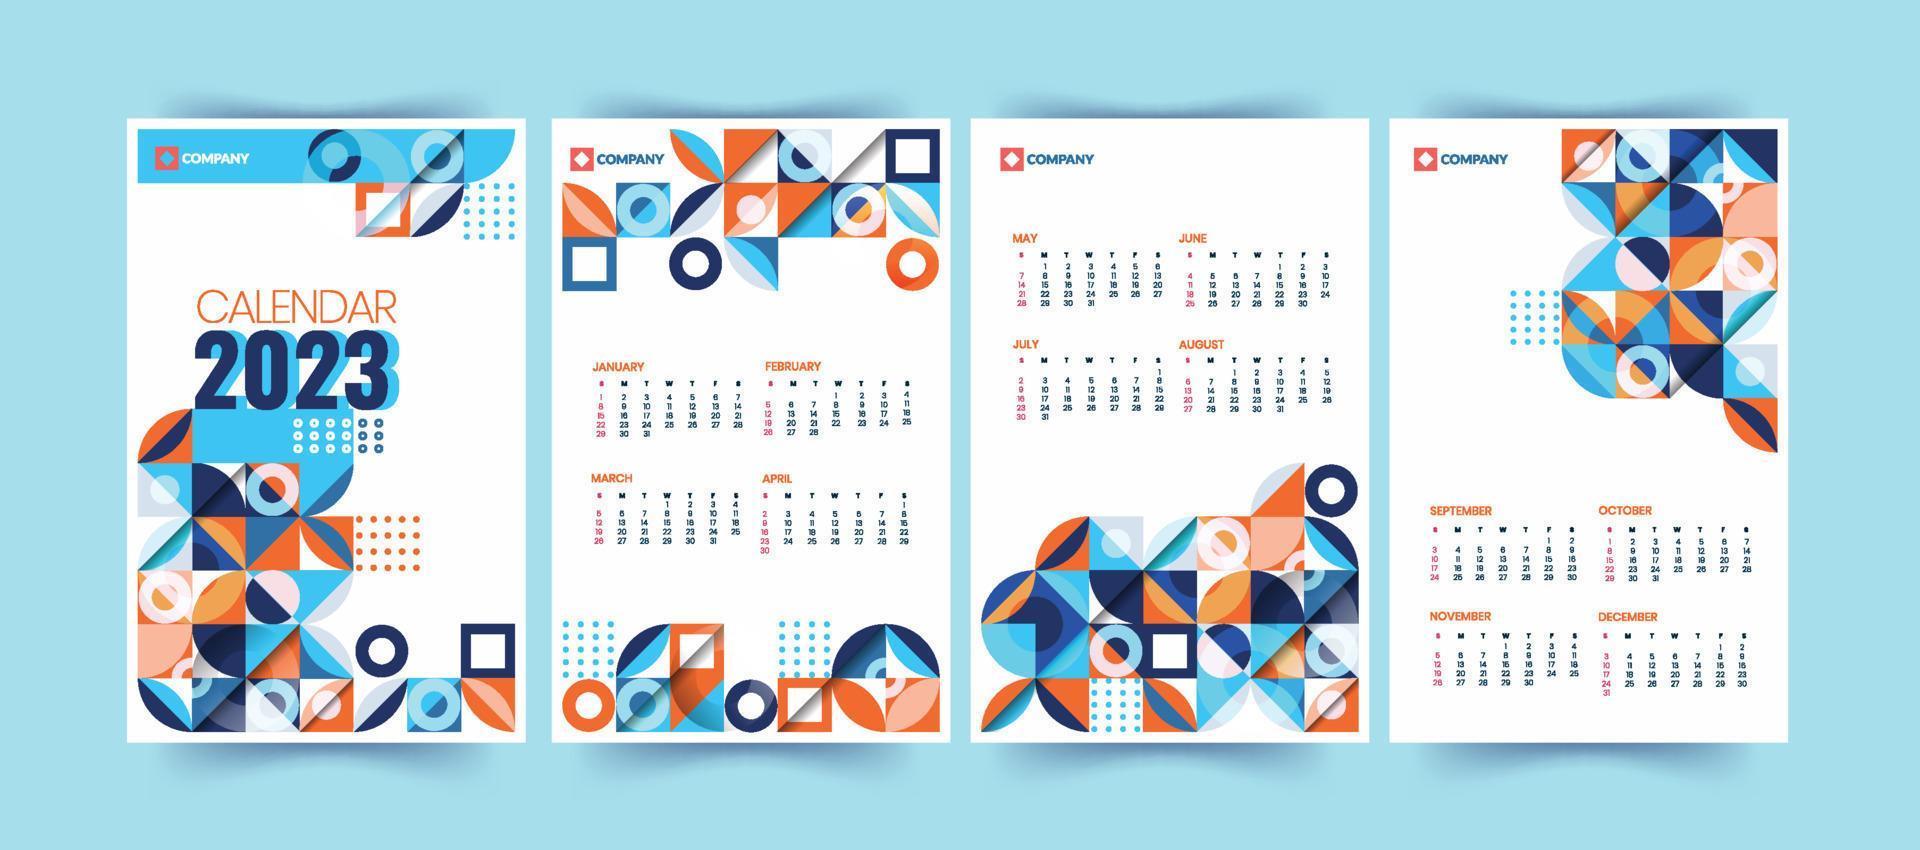 Corporate Calendar with Geometric Pattern vector